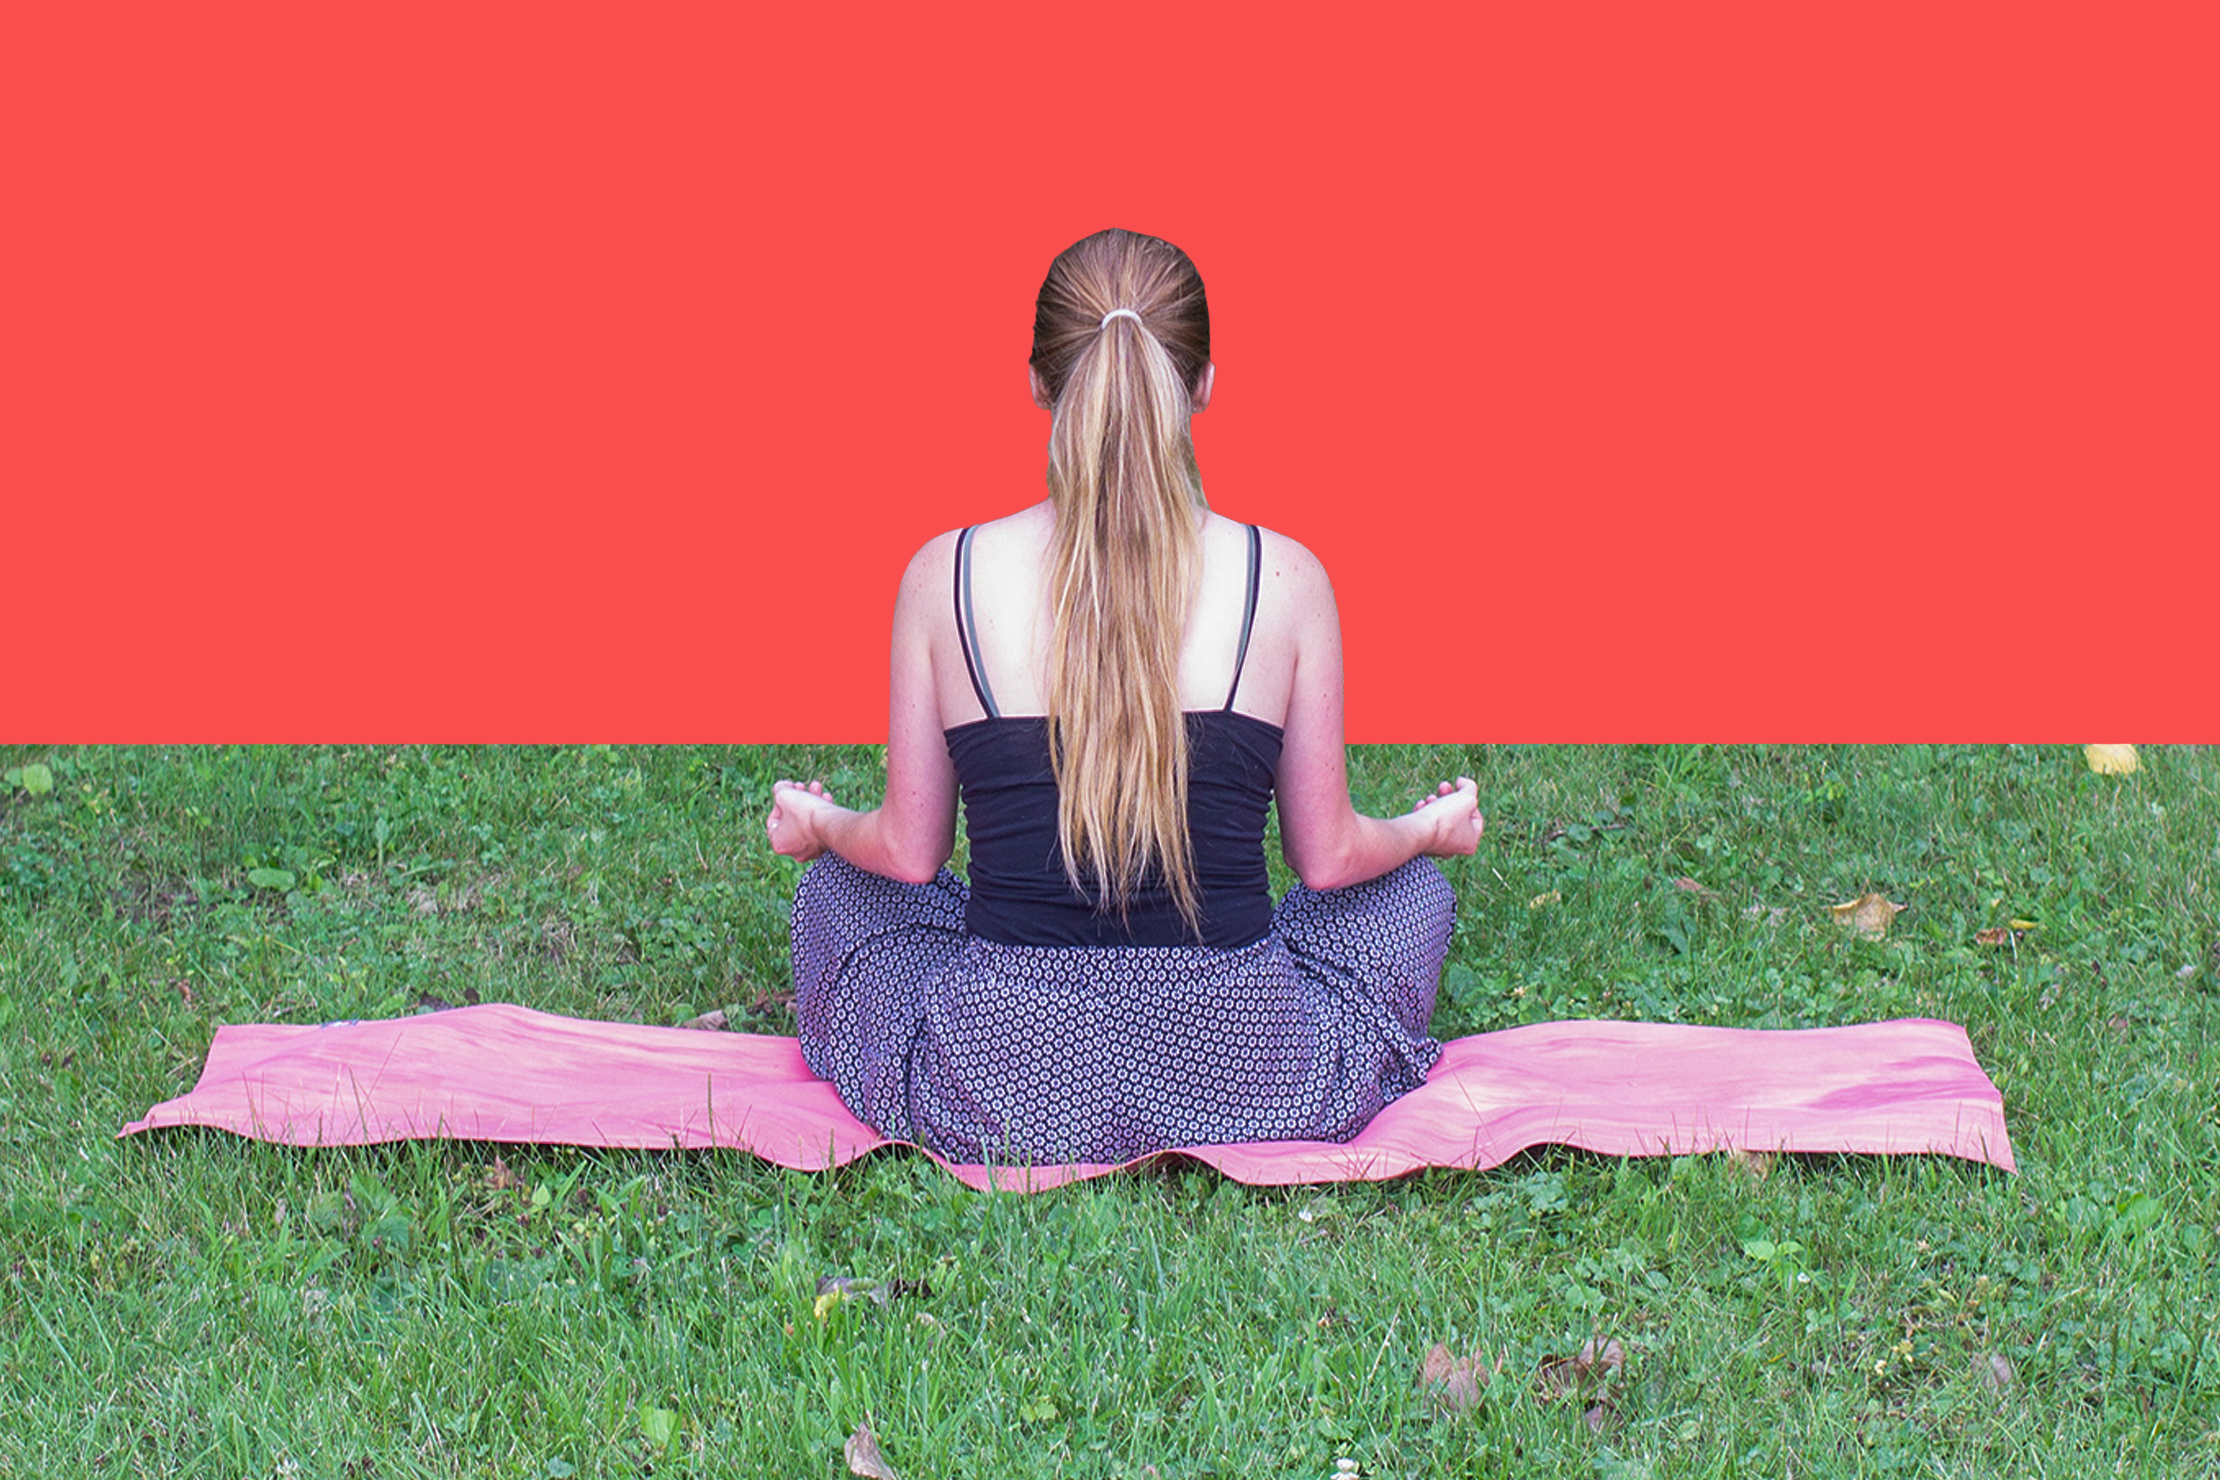 Yogo - The Best Folding Travel Yoga Mat 